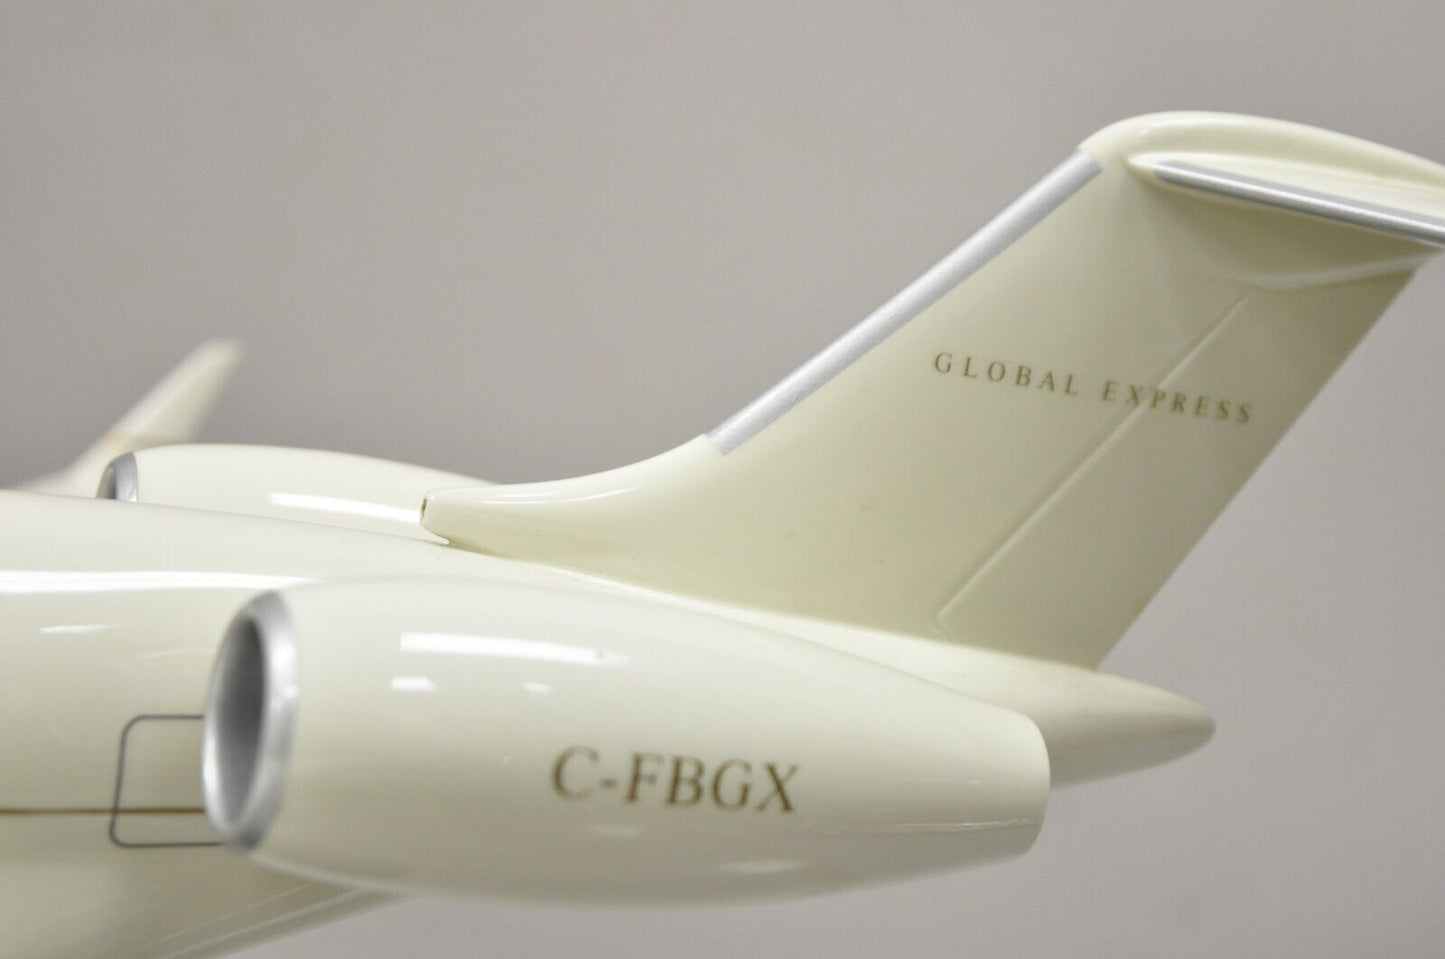 Space Model London England Global Express C-FBGX Bombardier Airplane Model Plane